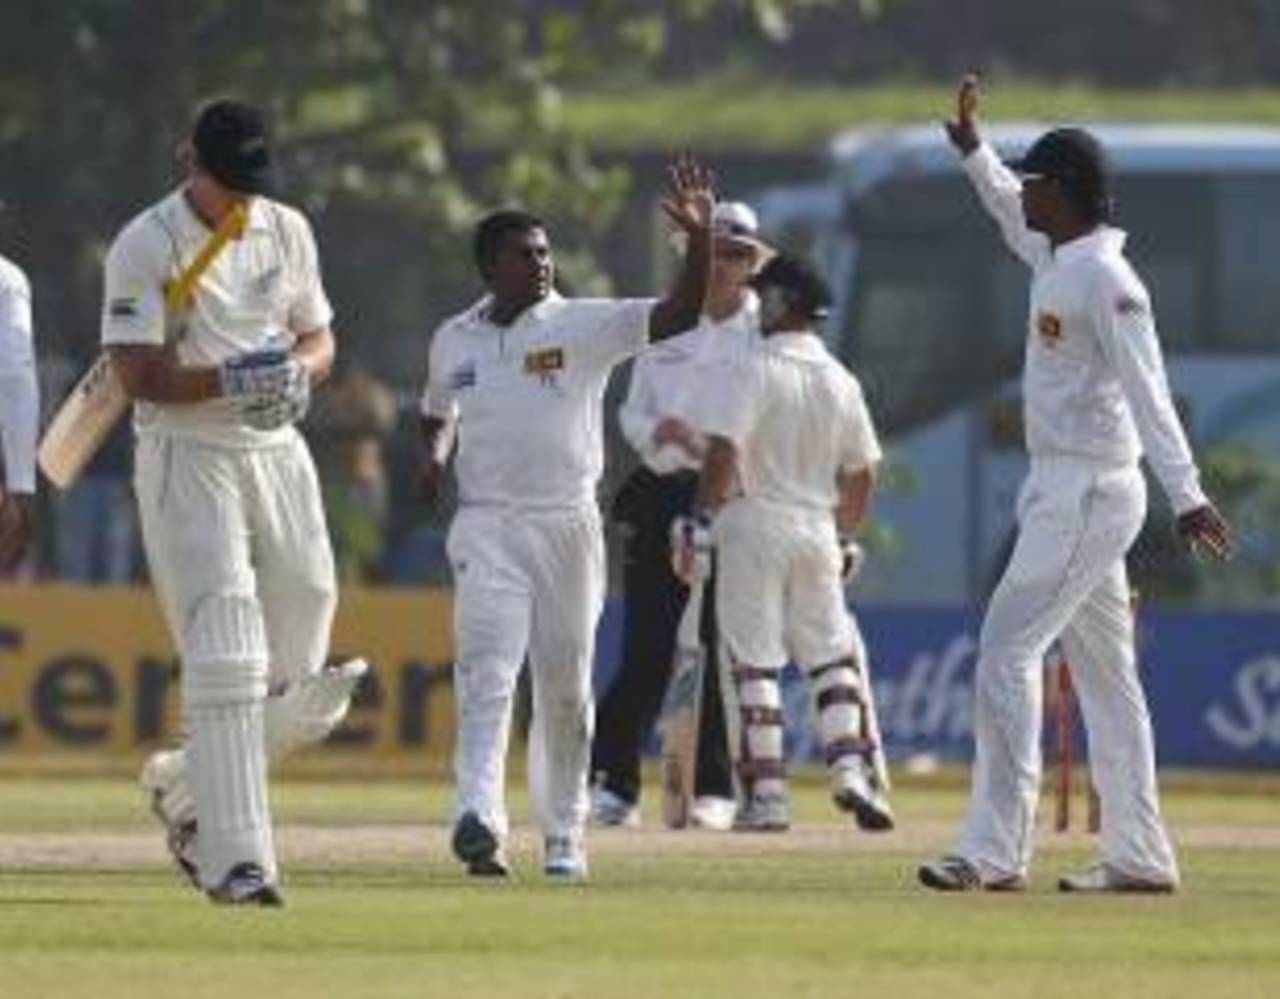 Rangana Herath sees off Doug Bracewell, Sri Lanka v New Zealand, 1st Test, Galle, 1st day, November 17, 2012